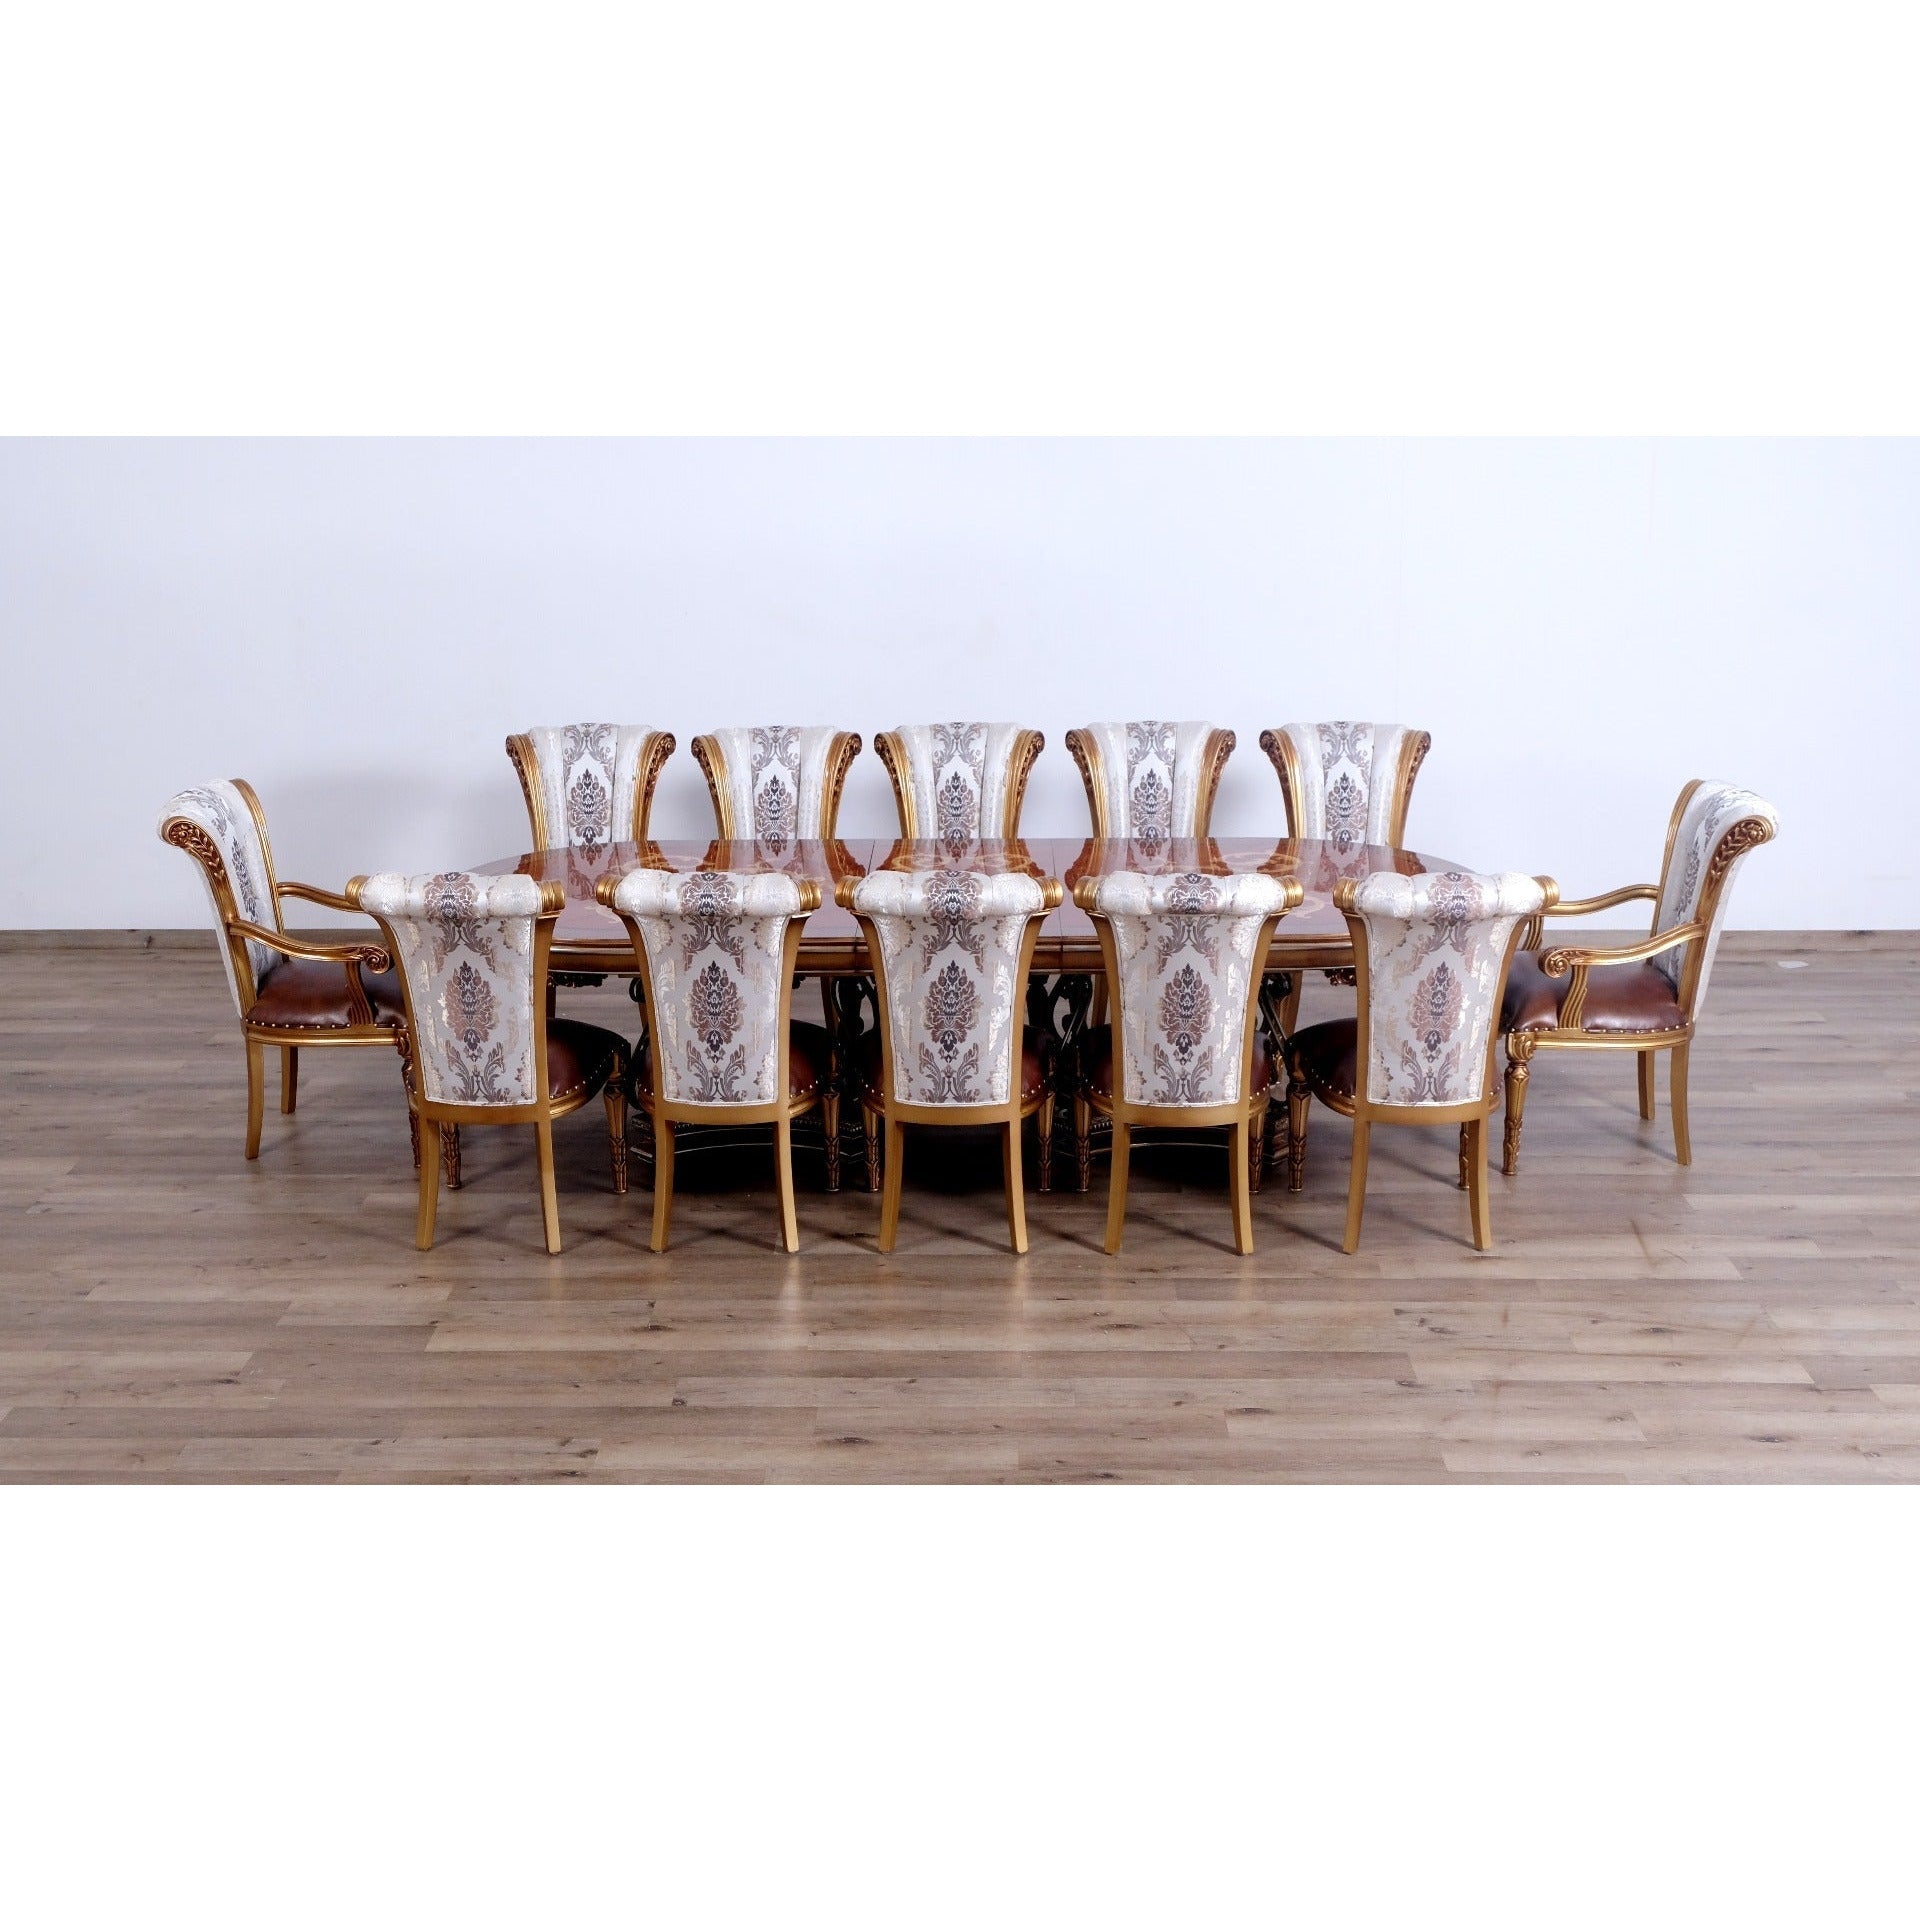 European Furniture - Valentina 11 Piece Dining Room Set in Brown - 51955-11SET - New Star Living